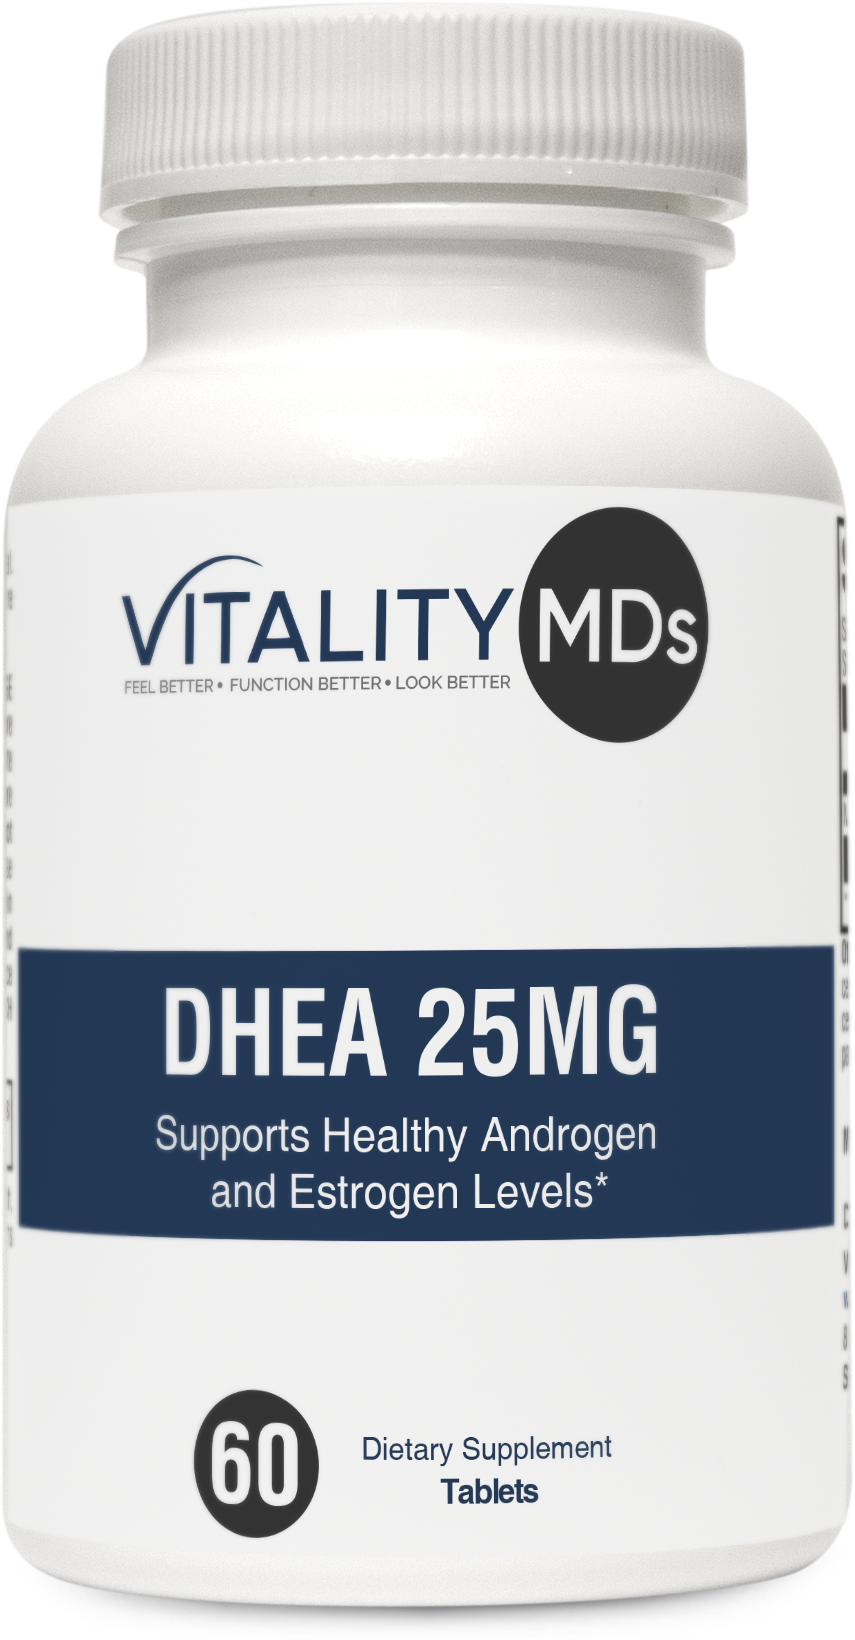 Vitality MDs, DHEA 25mg